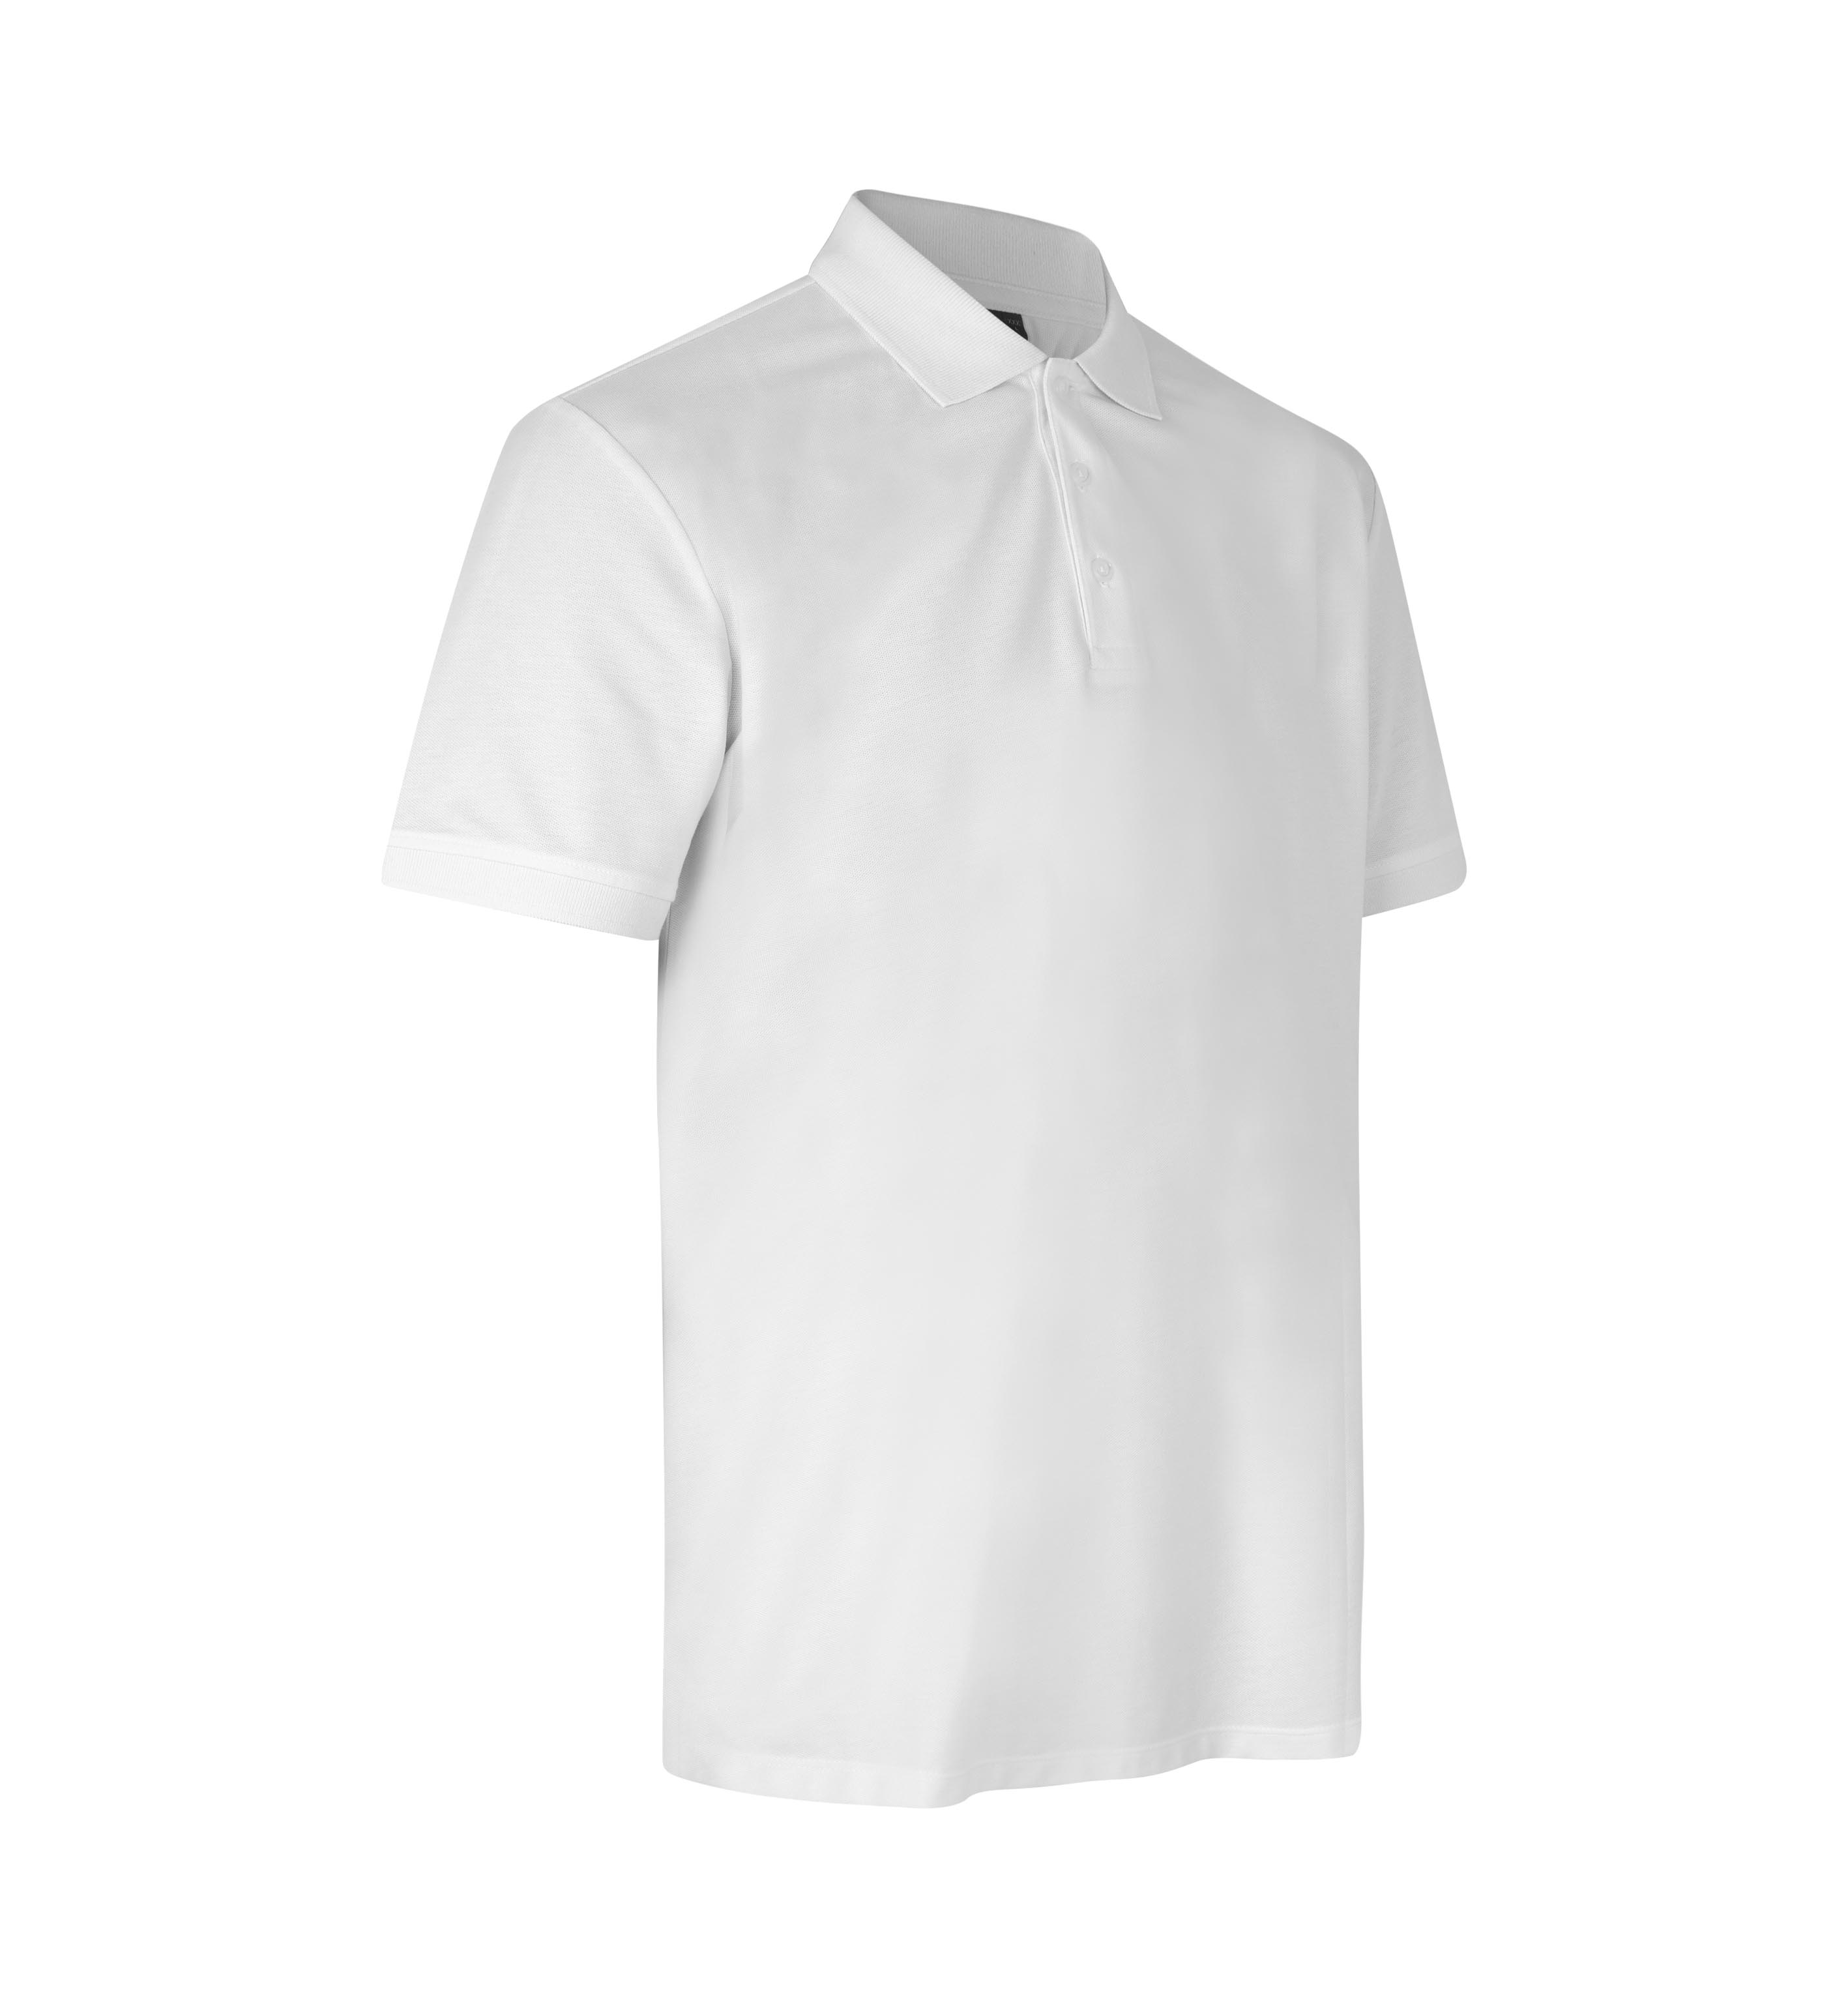 PRO Wear men's classic CARE polo shirt 210-220 g/m² ID Identity®.